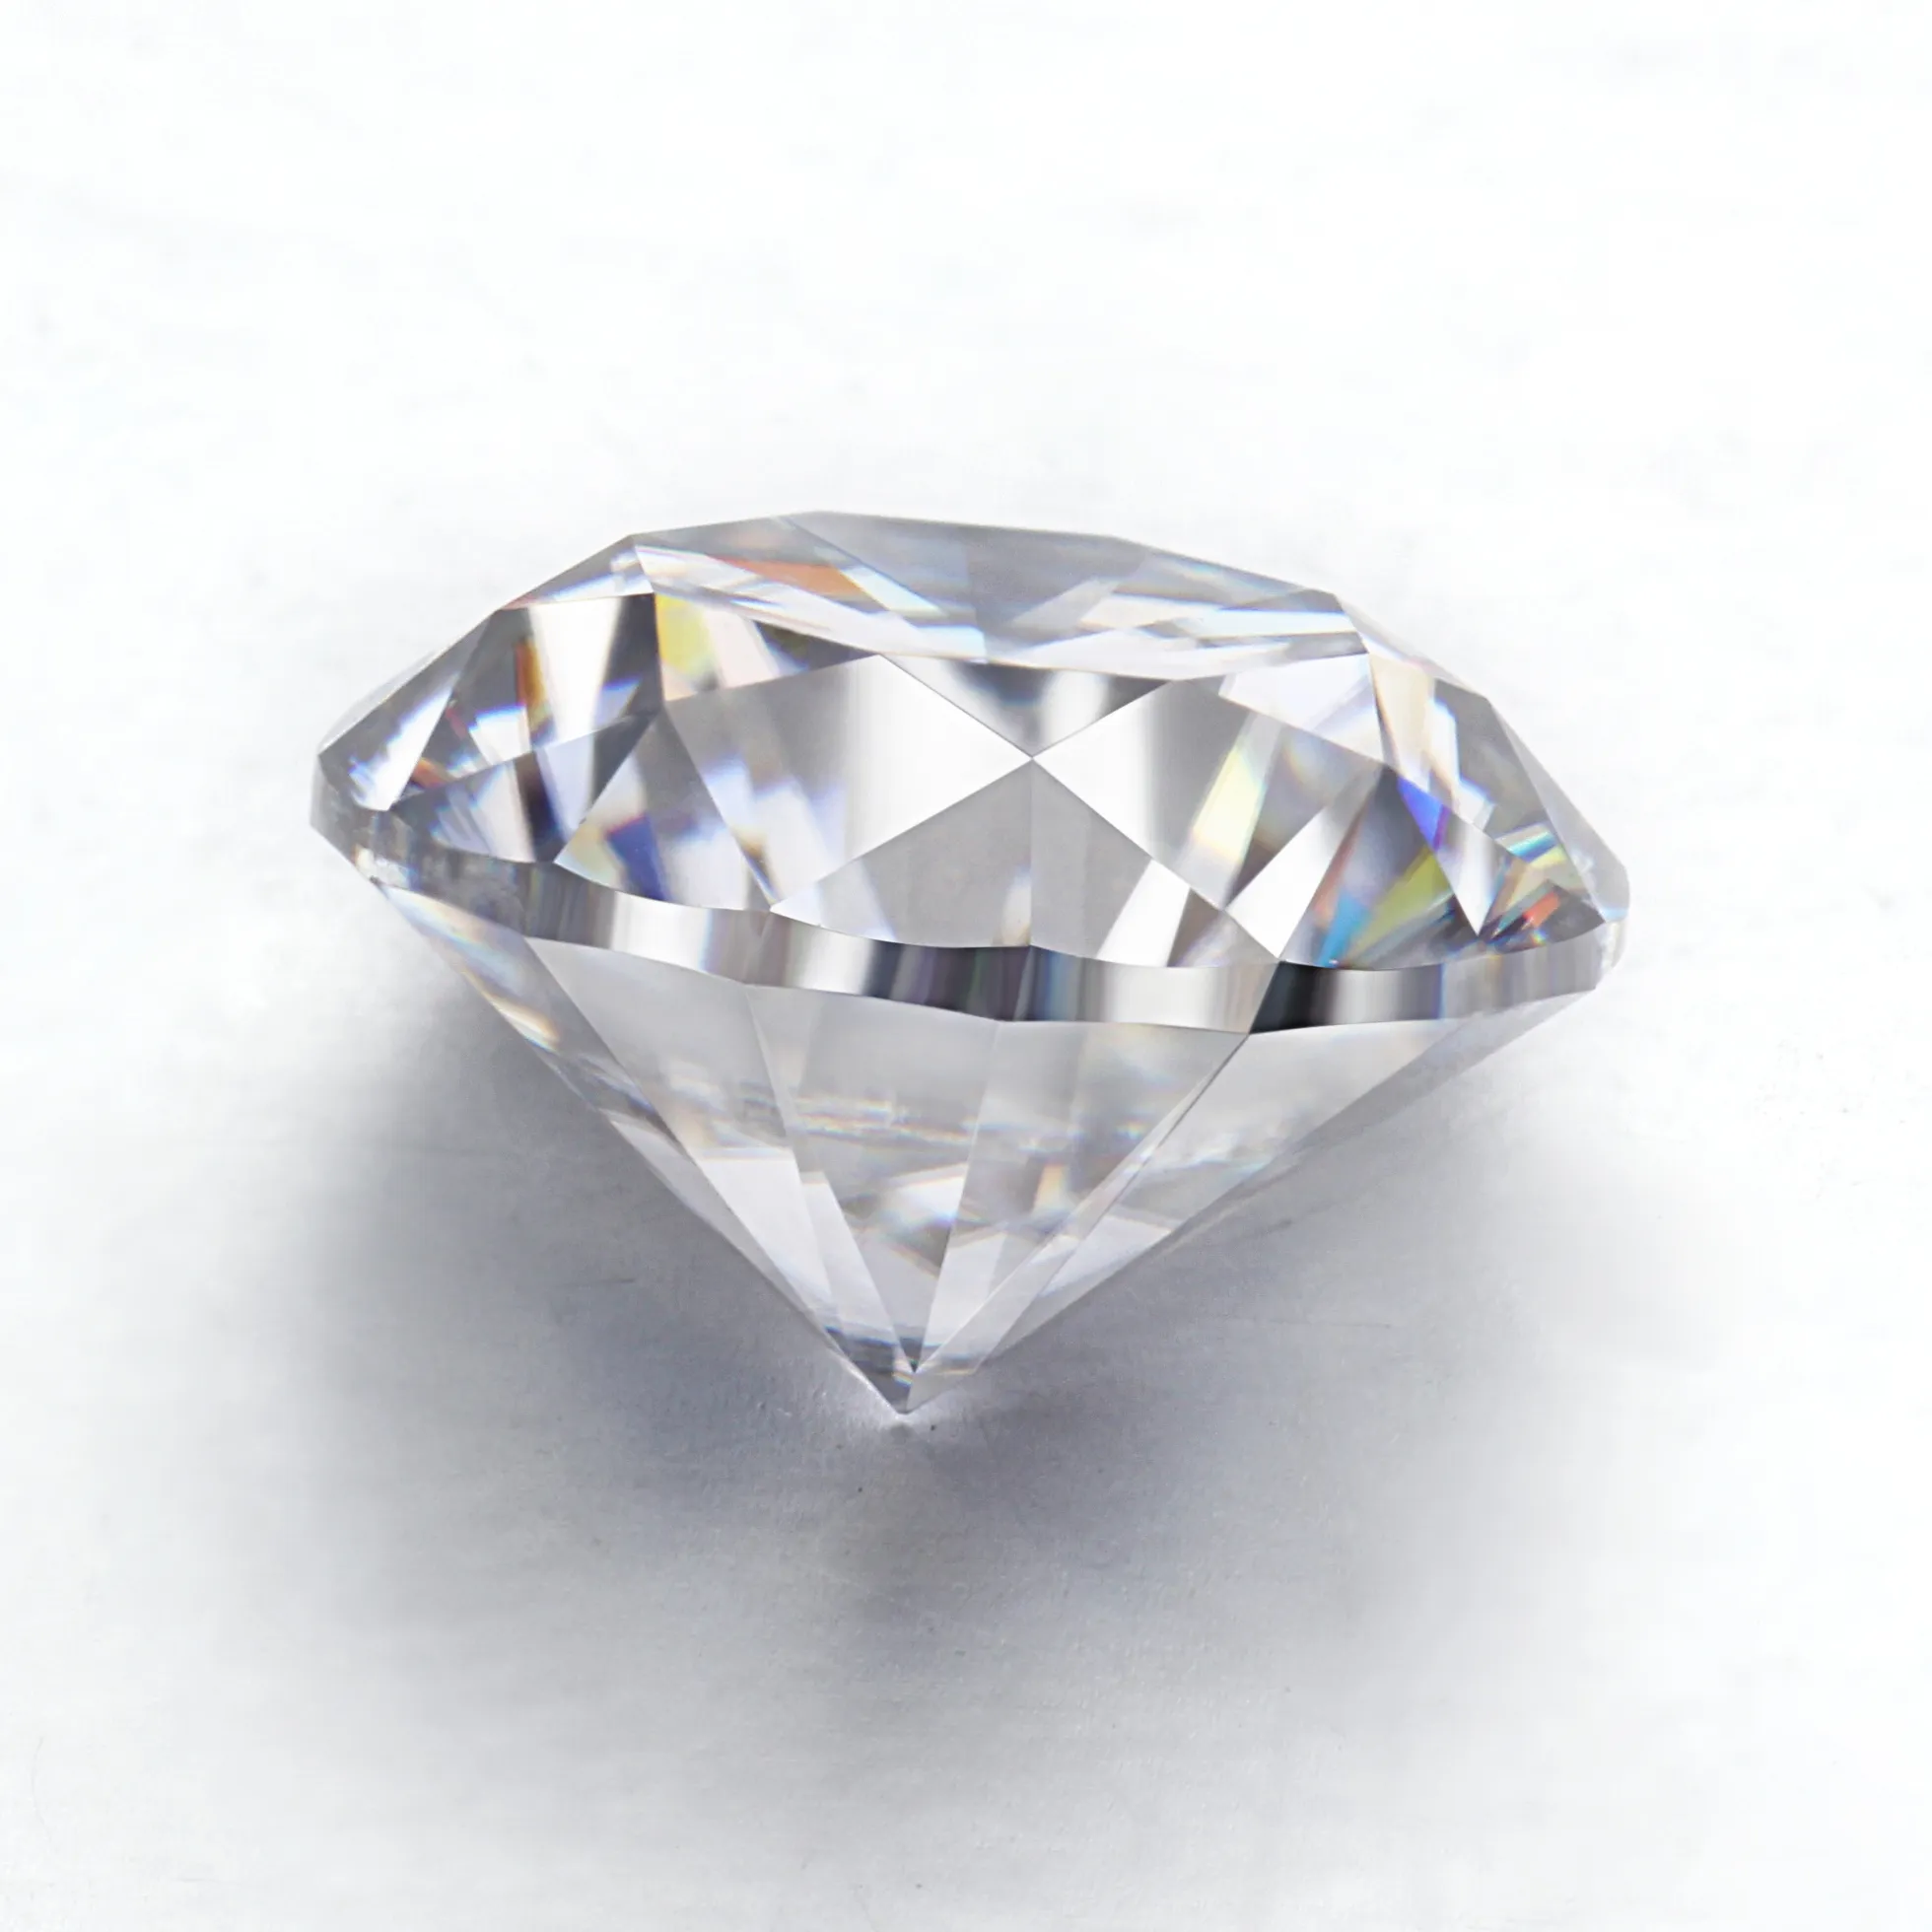 Starsgem D color round brilliant cut white lab created moissanite stone diamond 6.5mm 1 carat